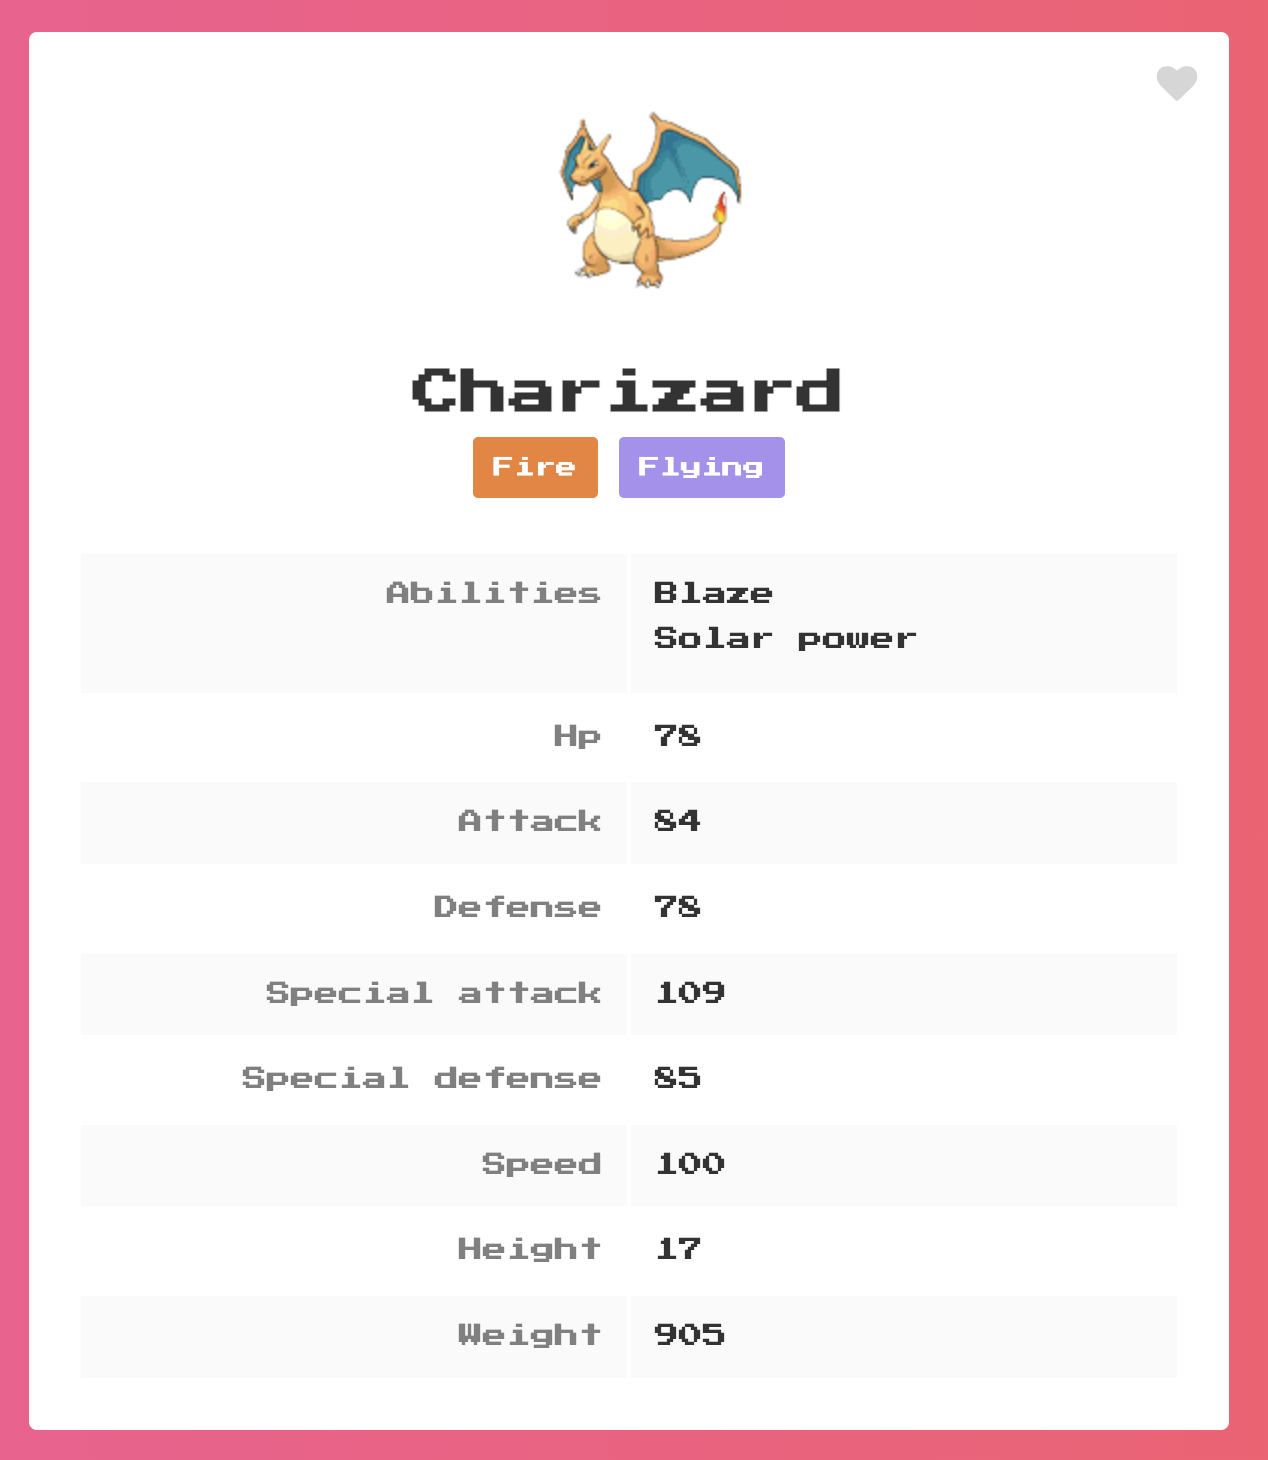 A screenshot of some data on the Pokemon Charizard